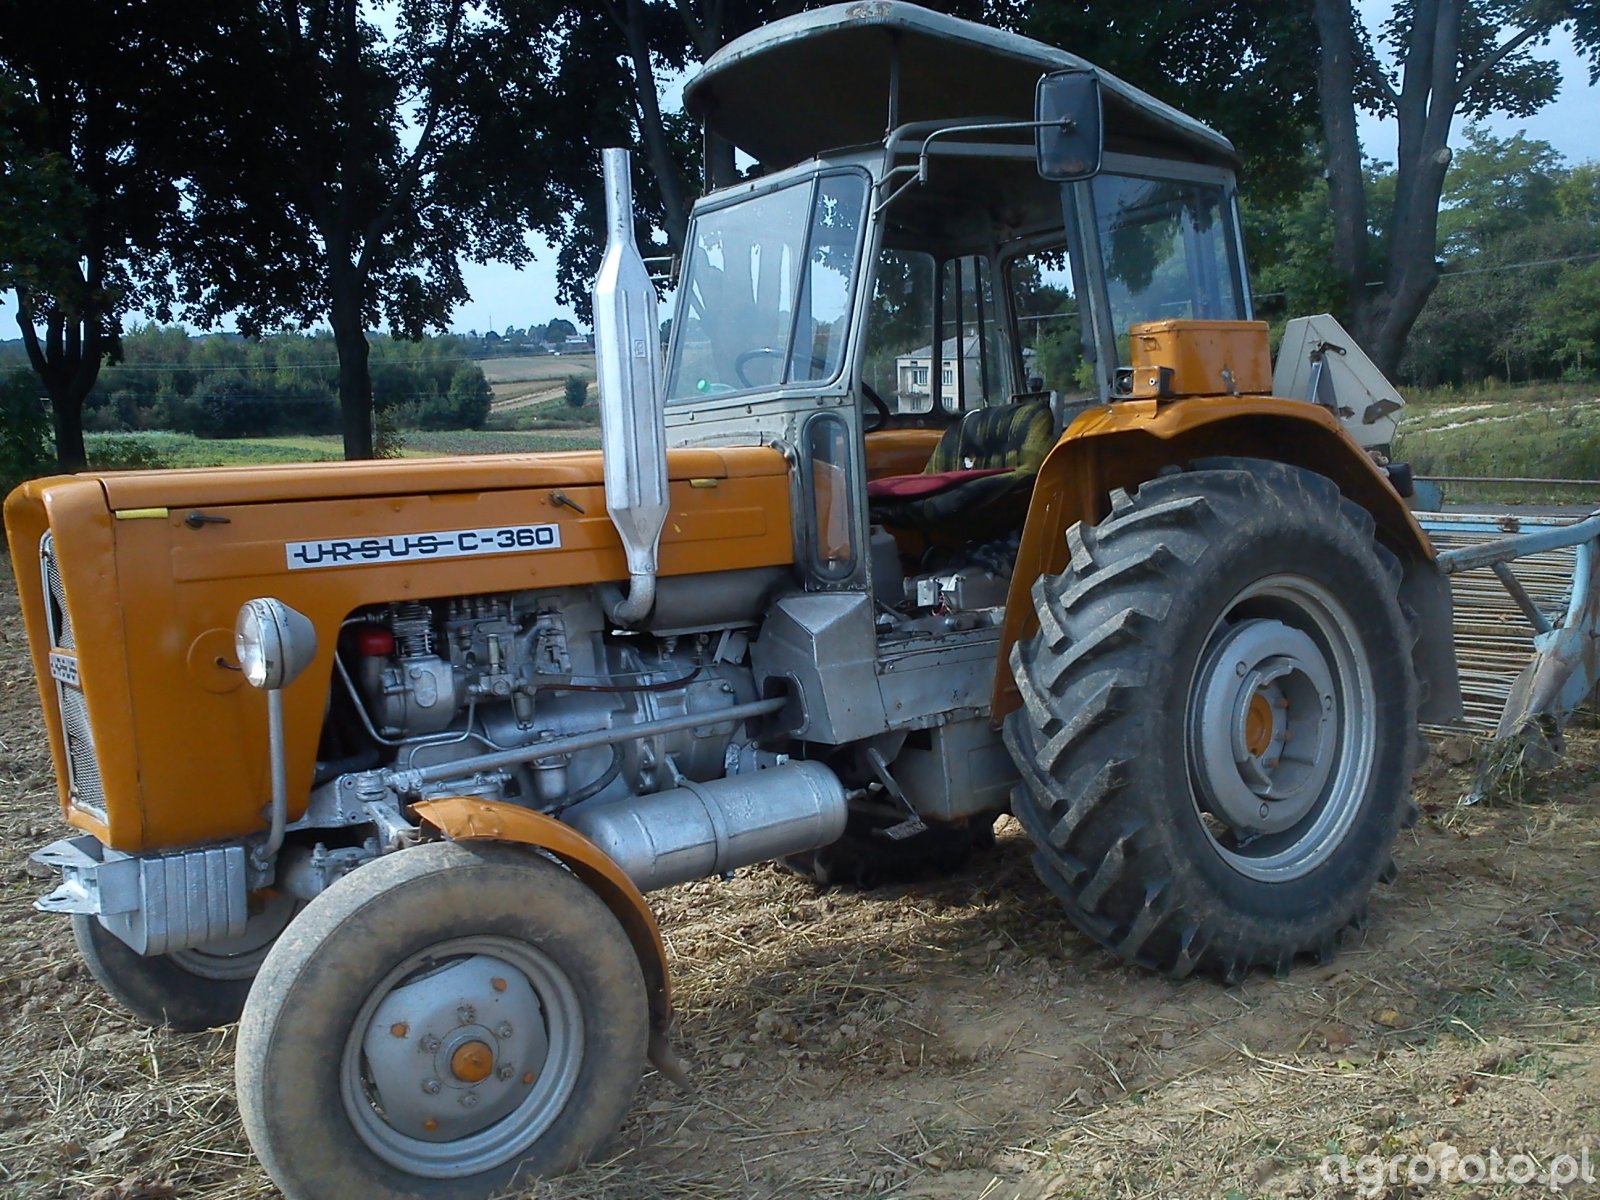 Zdj cie Traktor Ursus C 360 Id 475702 Galeria Rolnicza Agrofoto